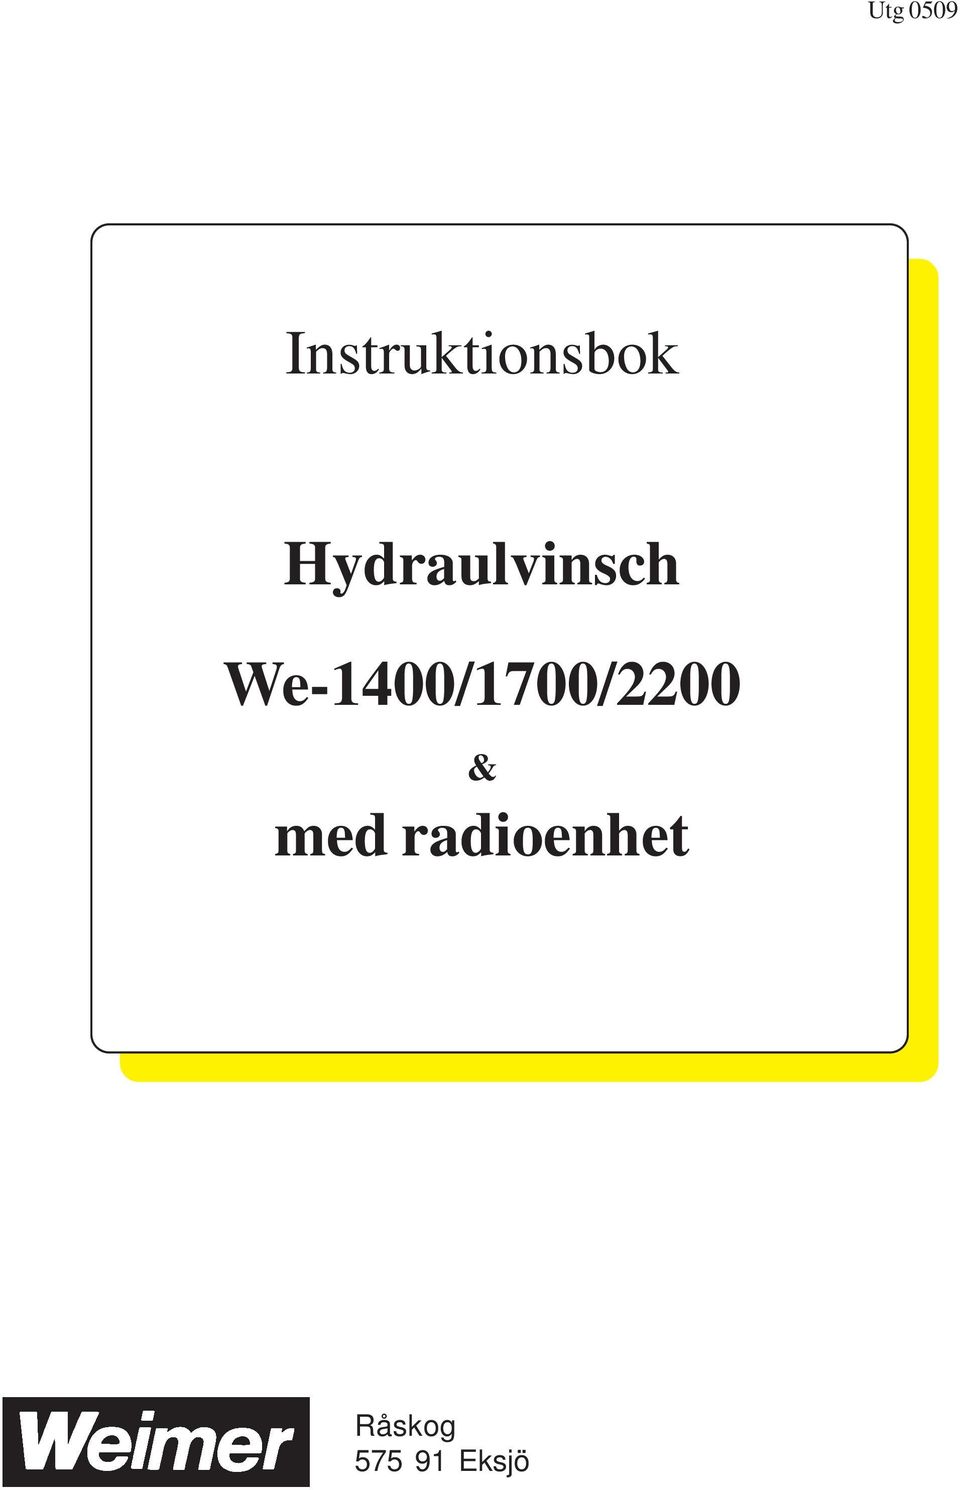 Instruktionsbok Hydraulvinsch